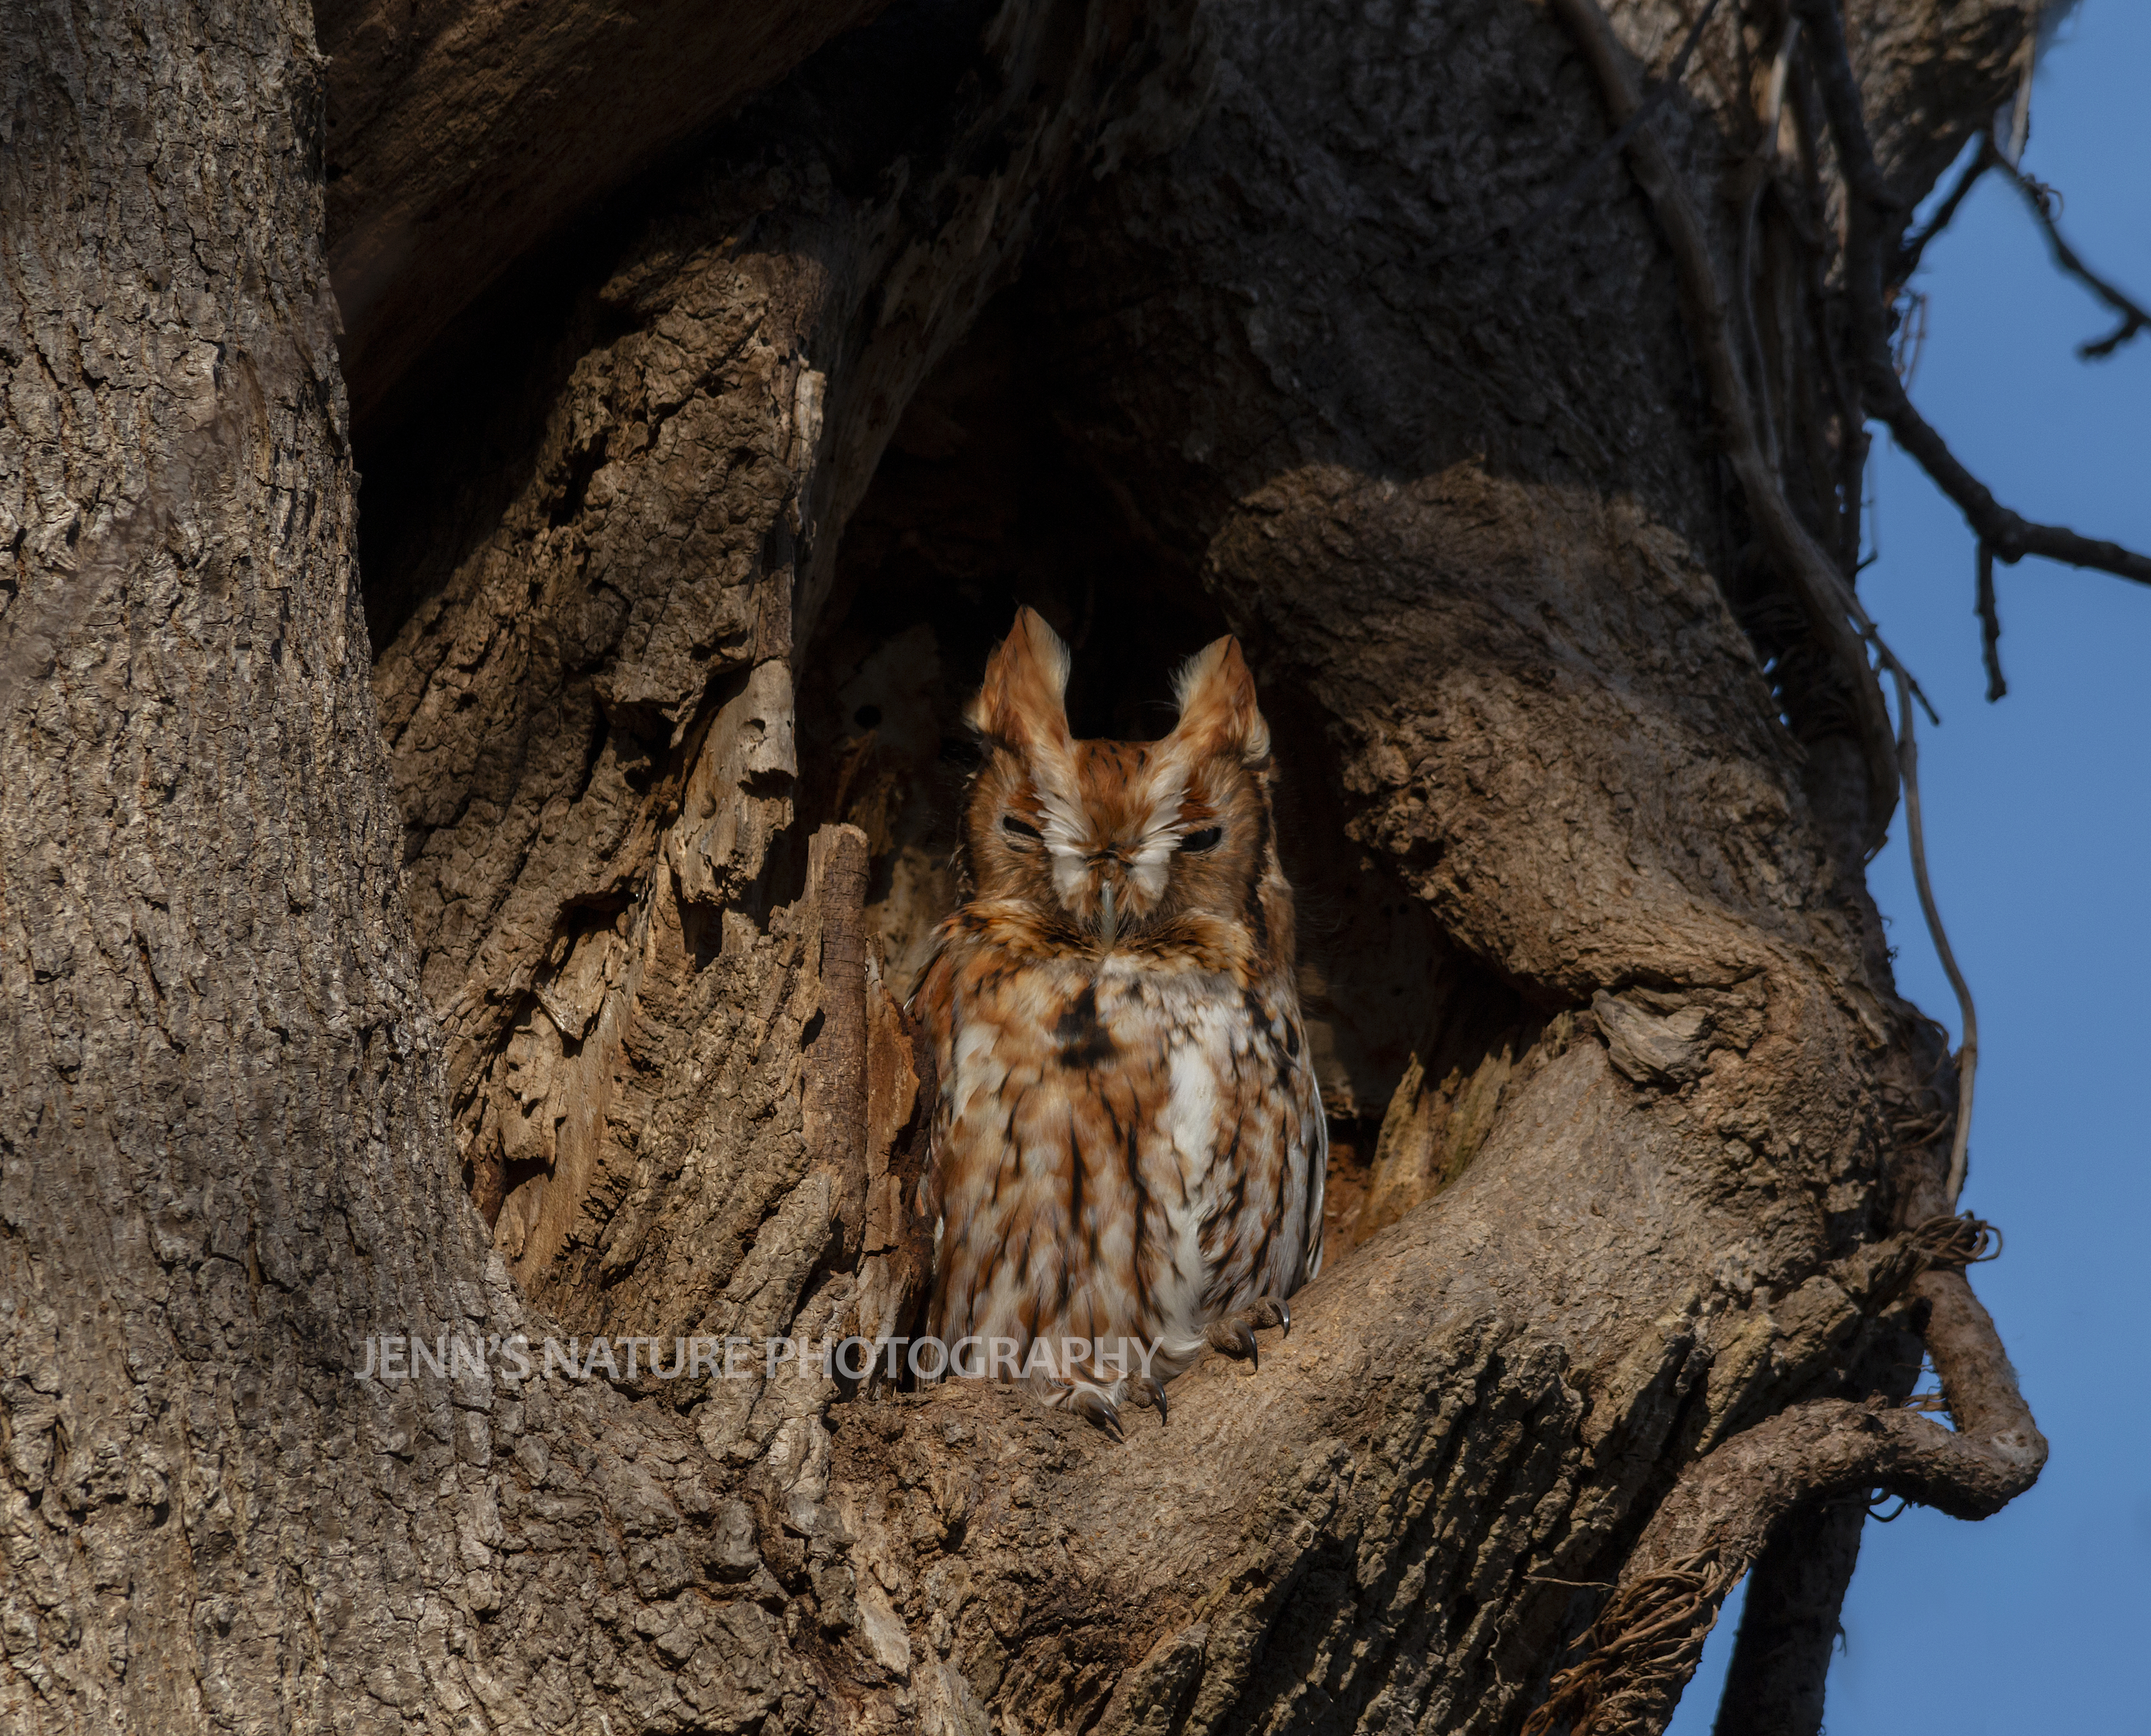 Eastern Screech Owl by Jennifer Gonzalez - Ashburn, Virginia